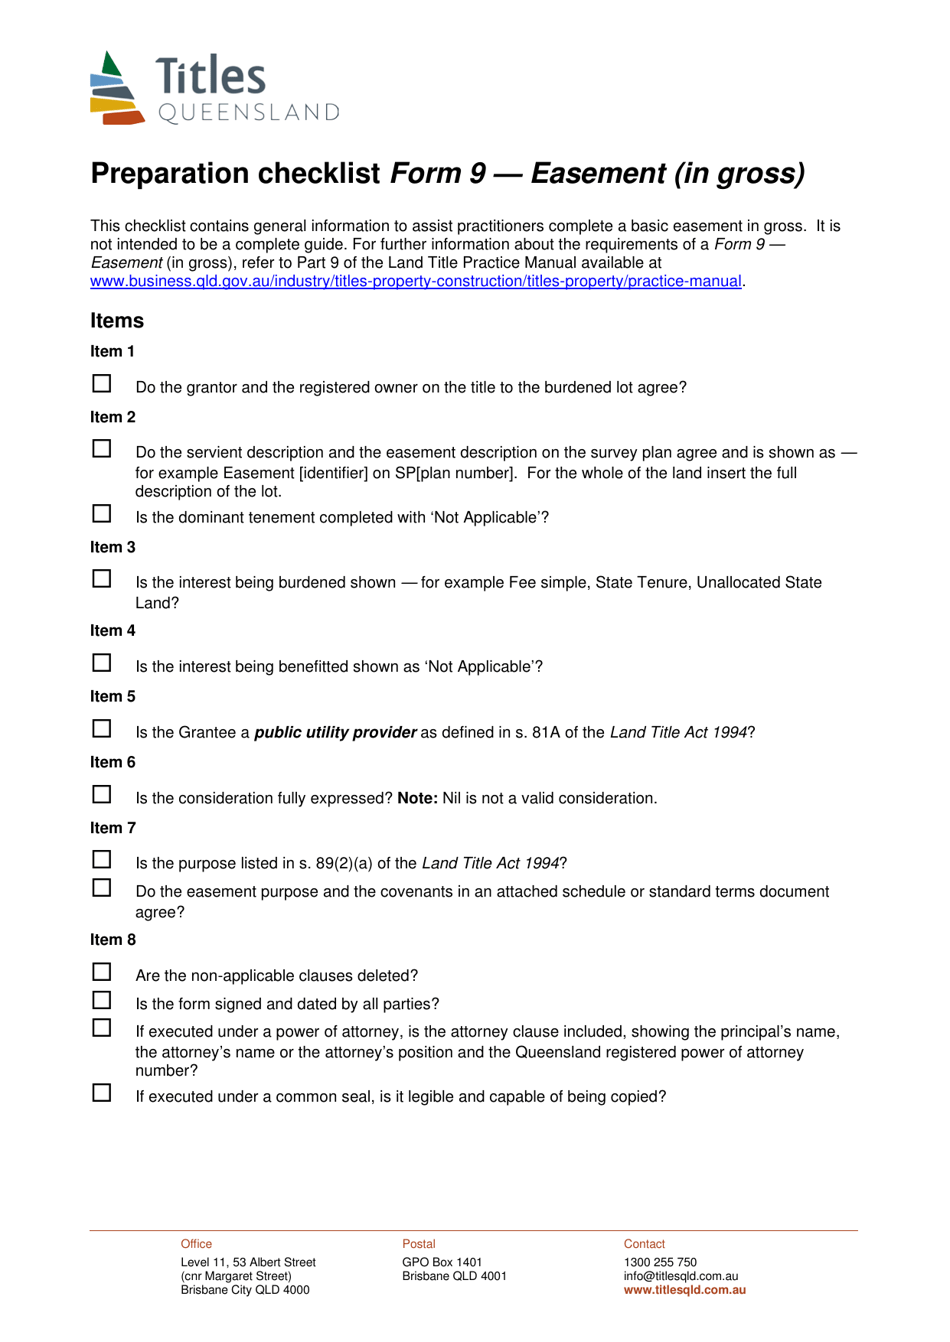 Form 9 Preparation Checklist- Easement (In Gross) - Queensland, Australia, Page 1